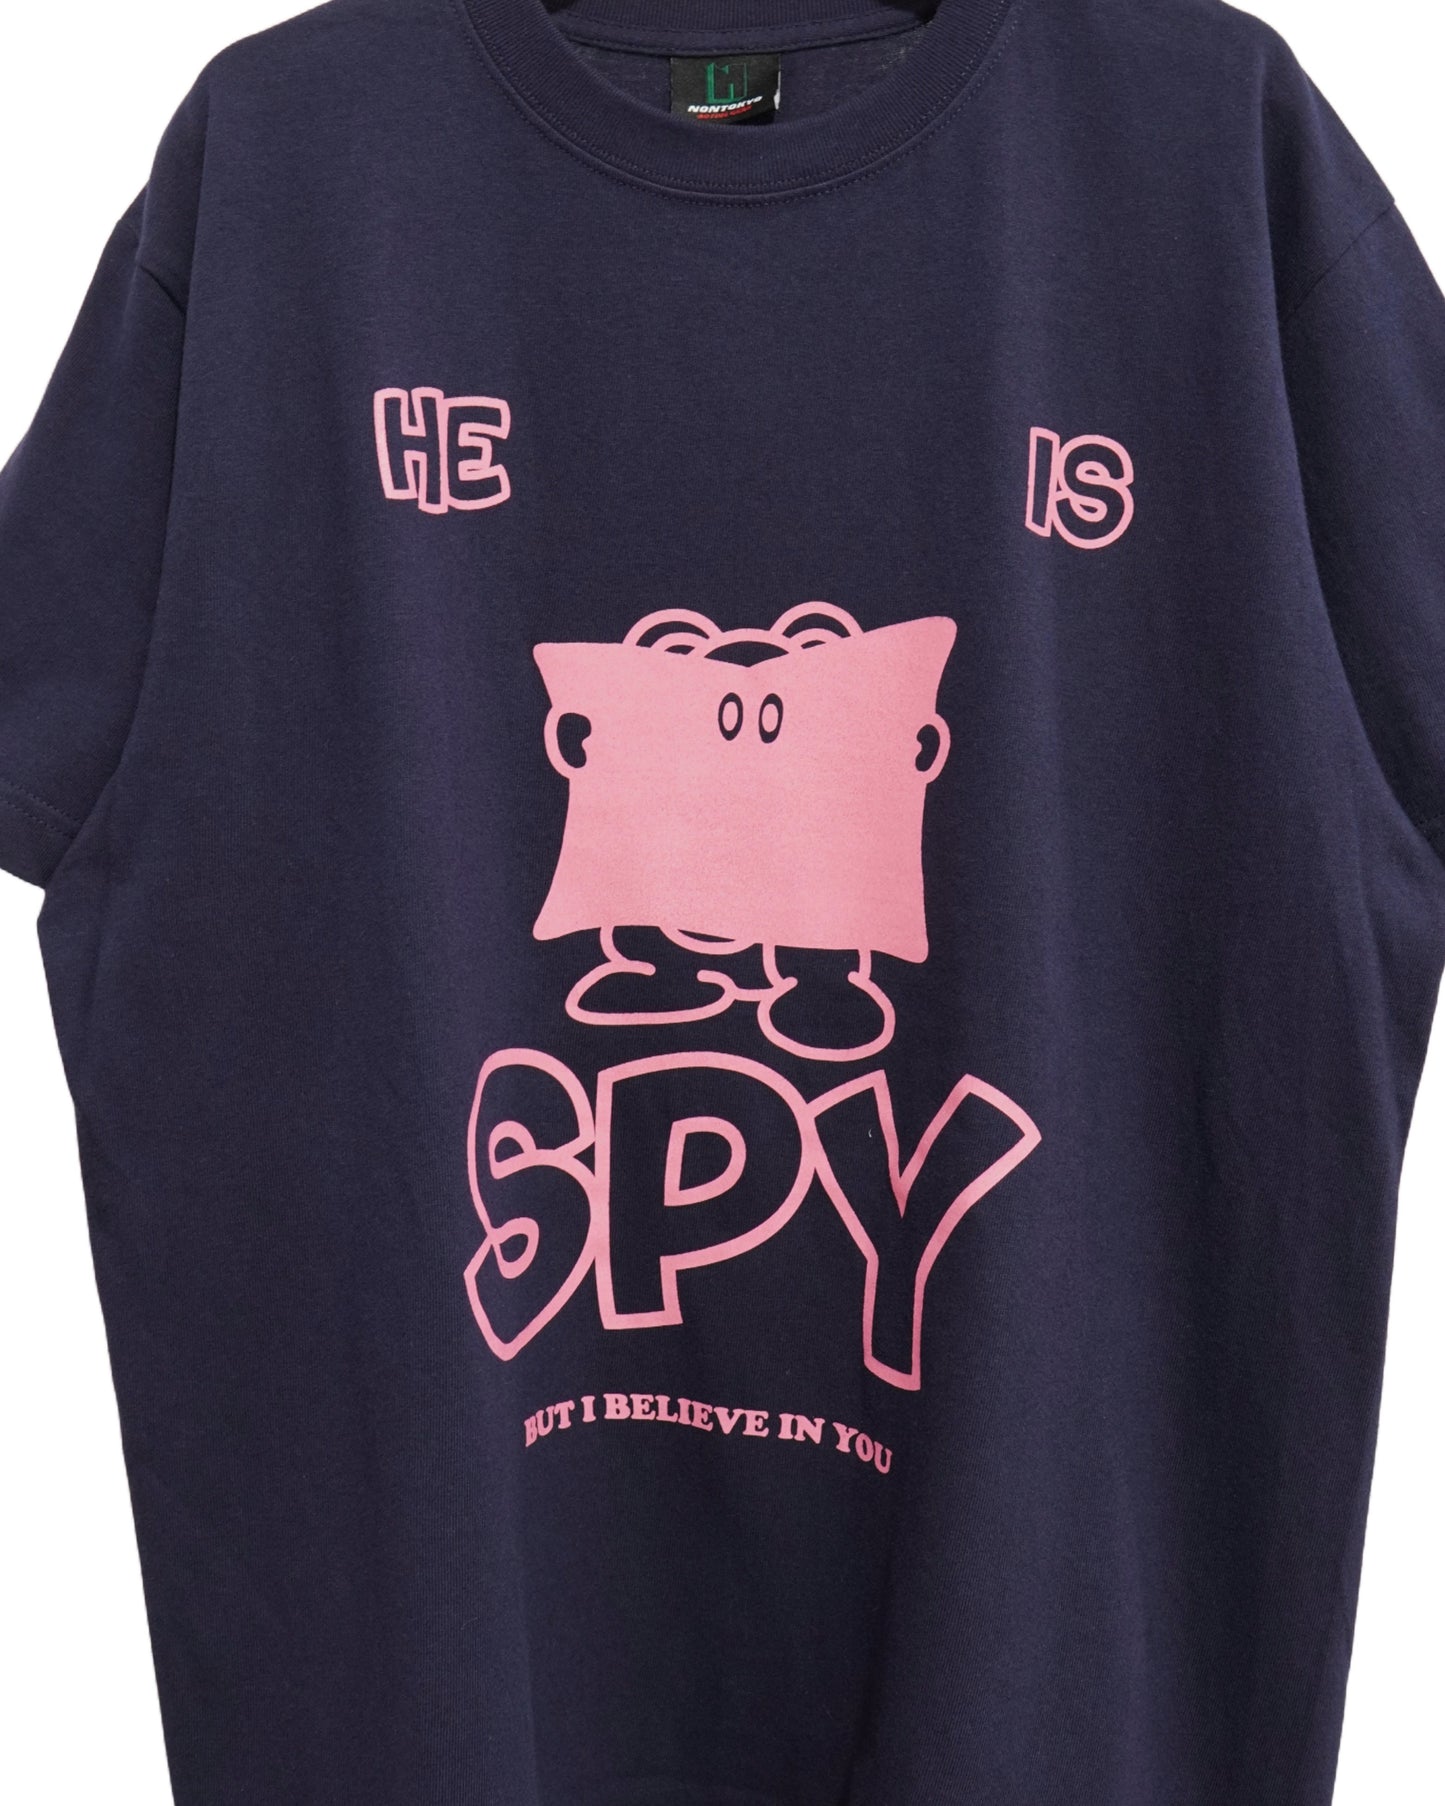 NON TOKYO /  PRINT T-SHIRT (SPY / NAVY) / 〈ノントーキョー〉プリントTシャツ (スパイ / ネイビー)